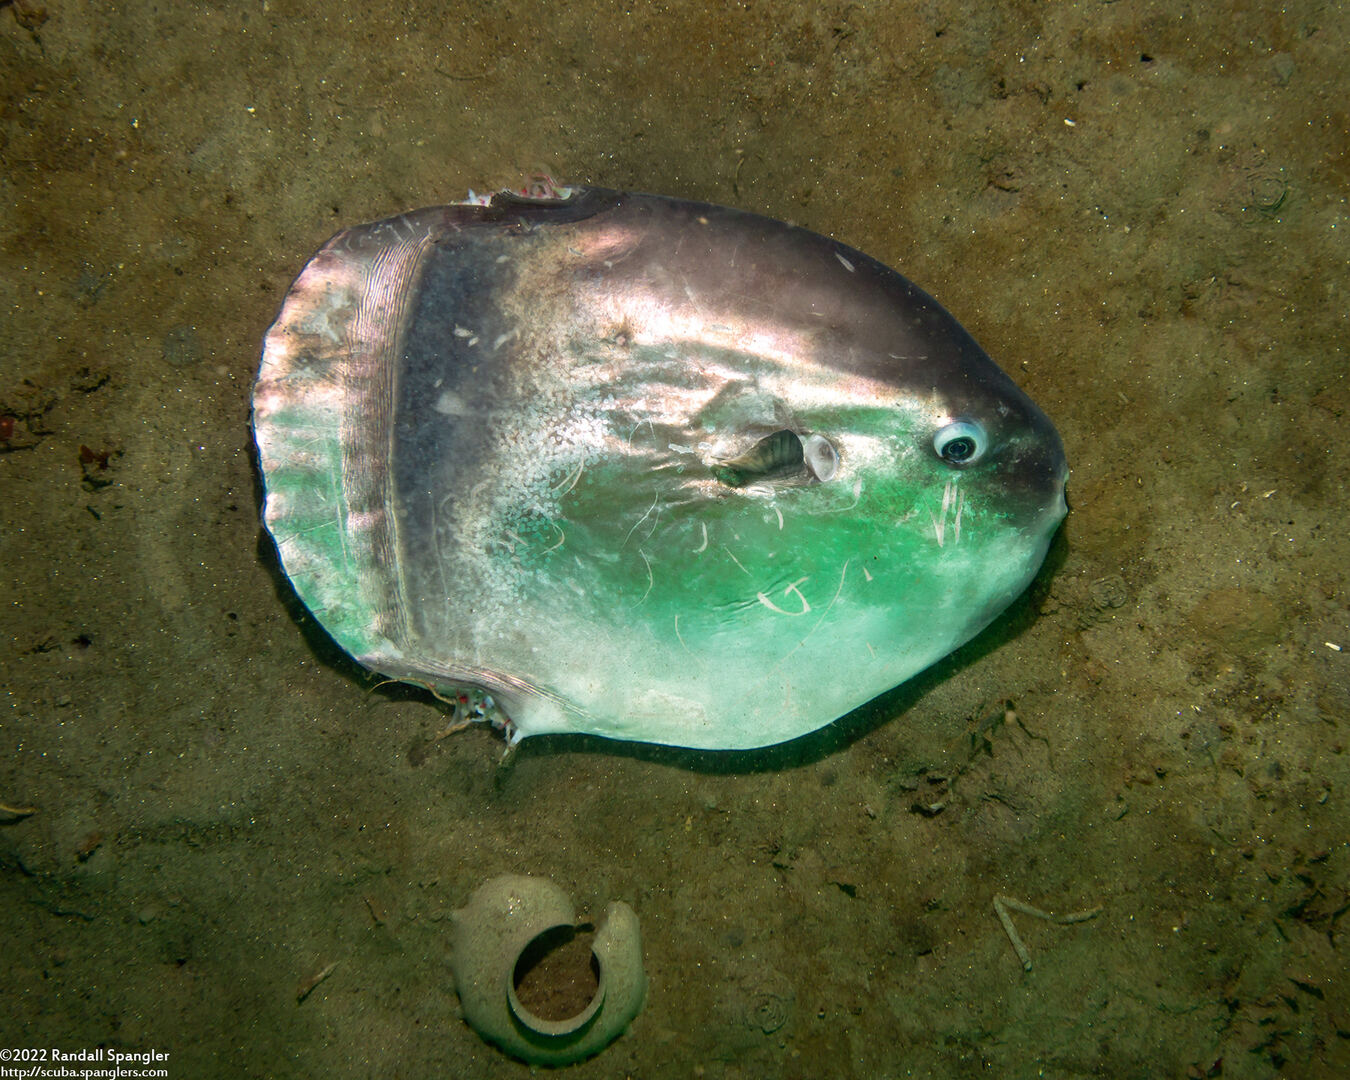 Mola mola (Ocean Sunfish)